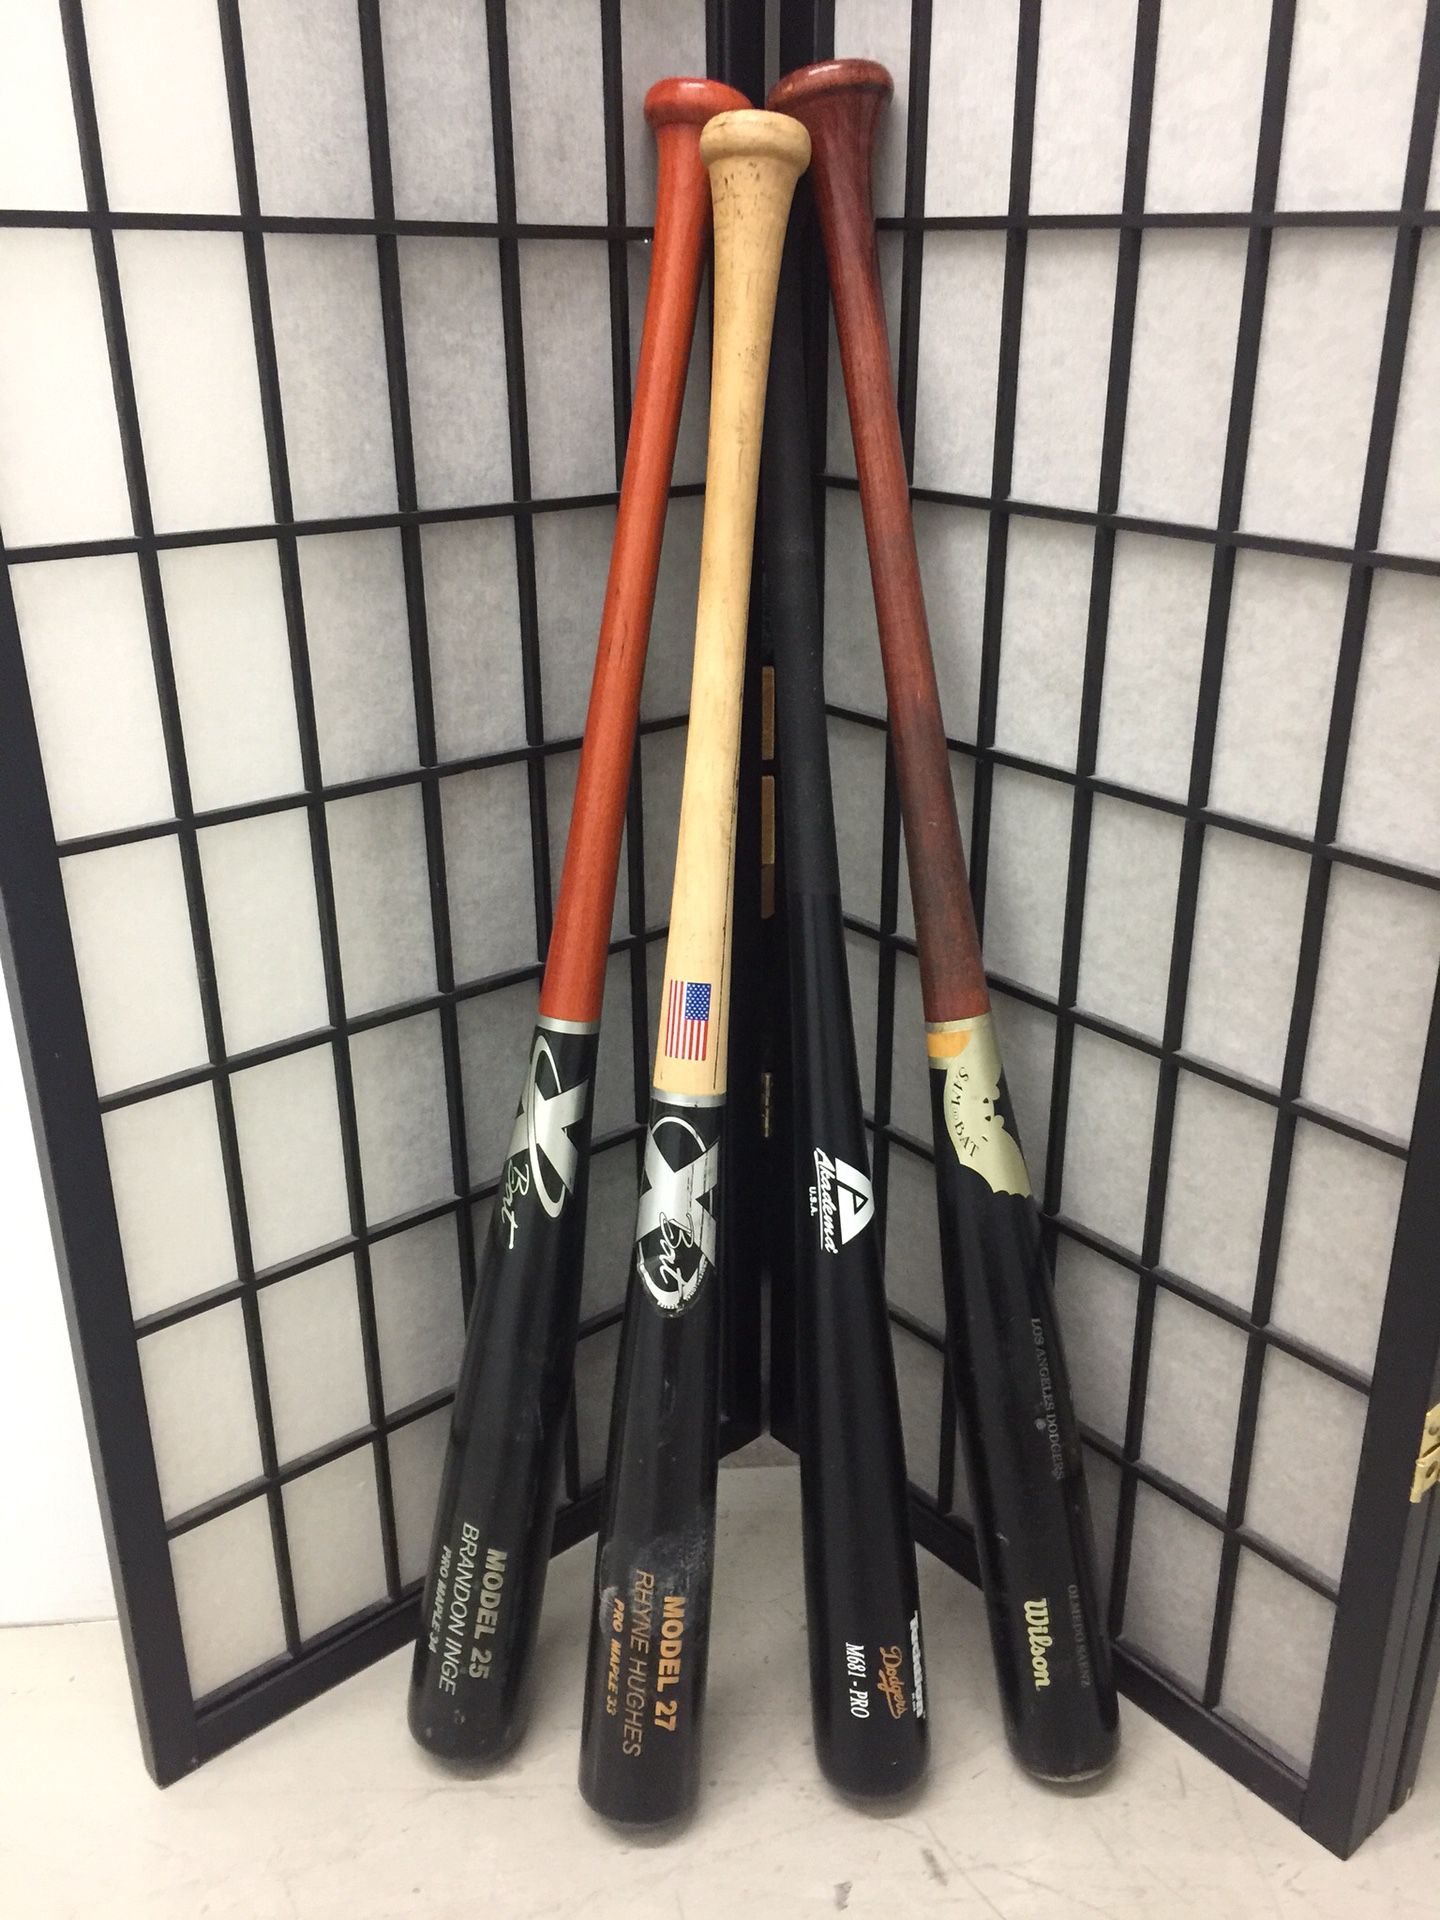 Wood pro baseball player game bats